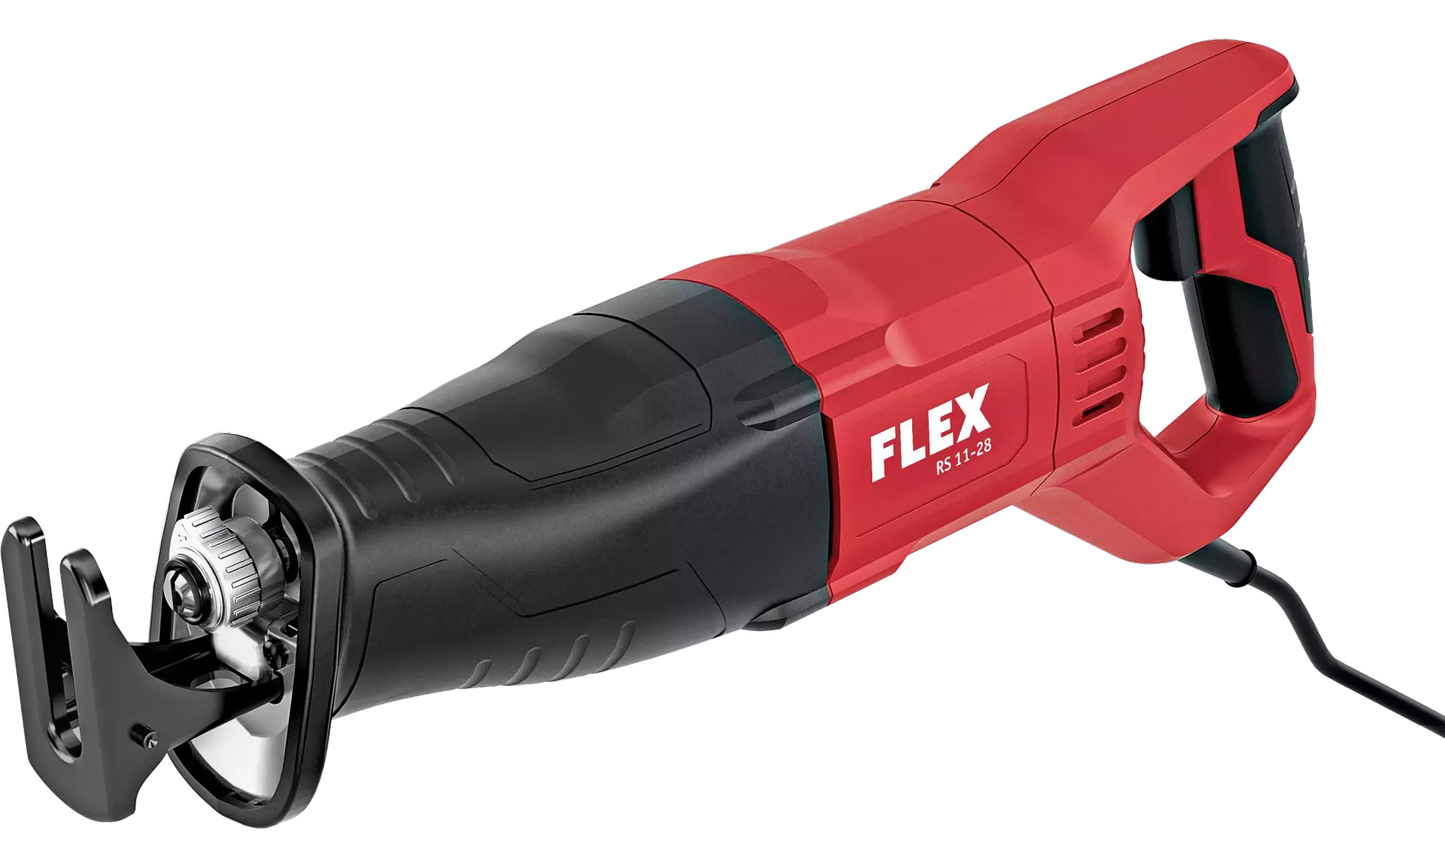 FLEX RS 11-28 Universal-Säbelsäge mit Gasgebeschalter